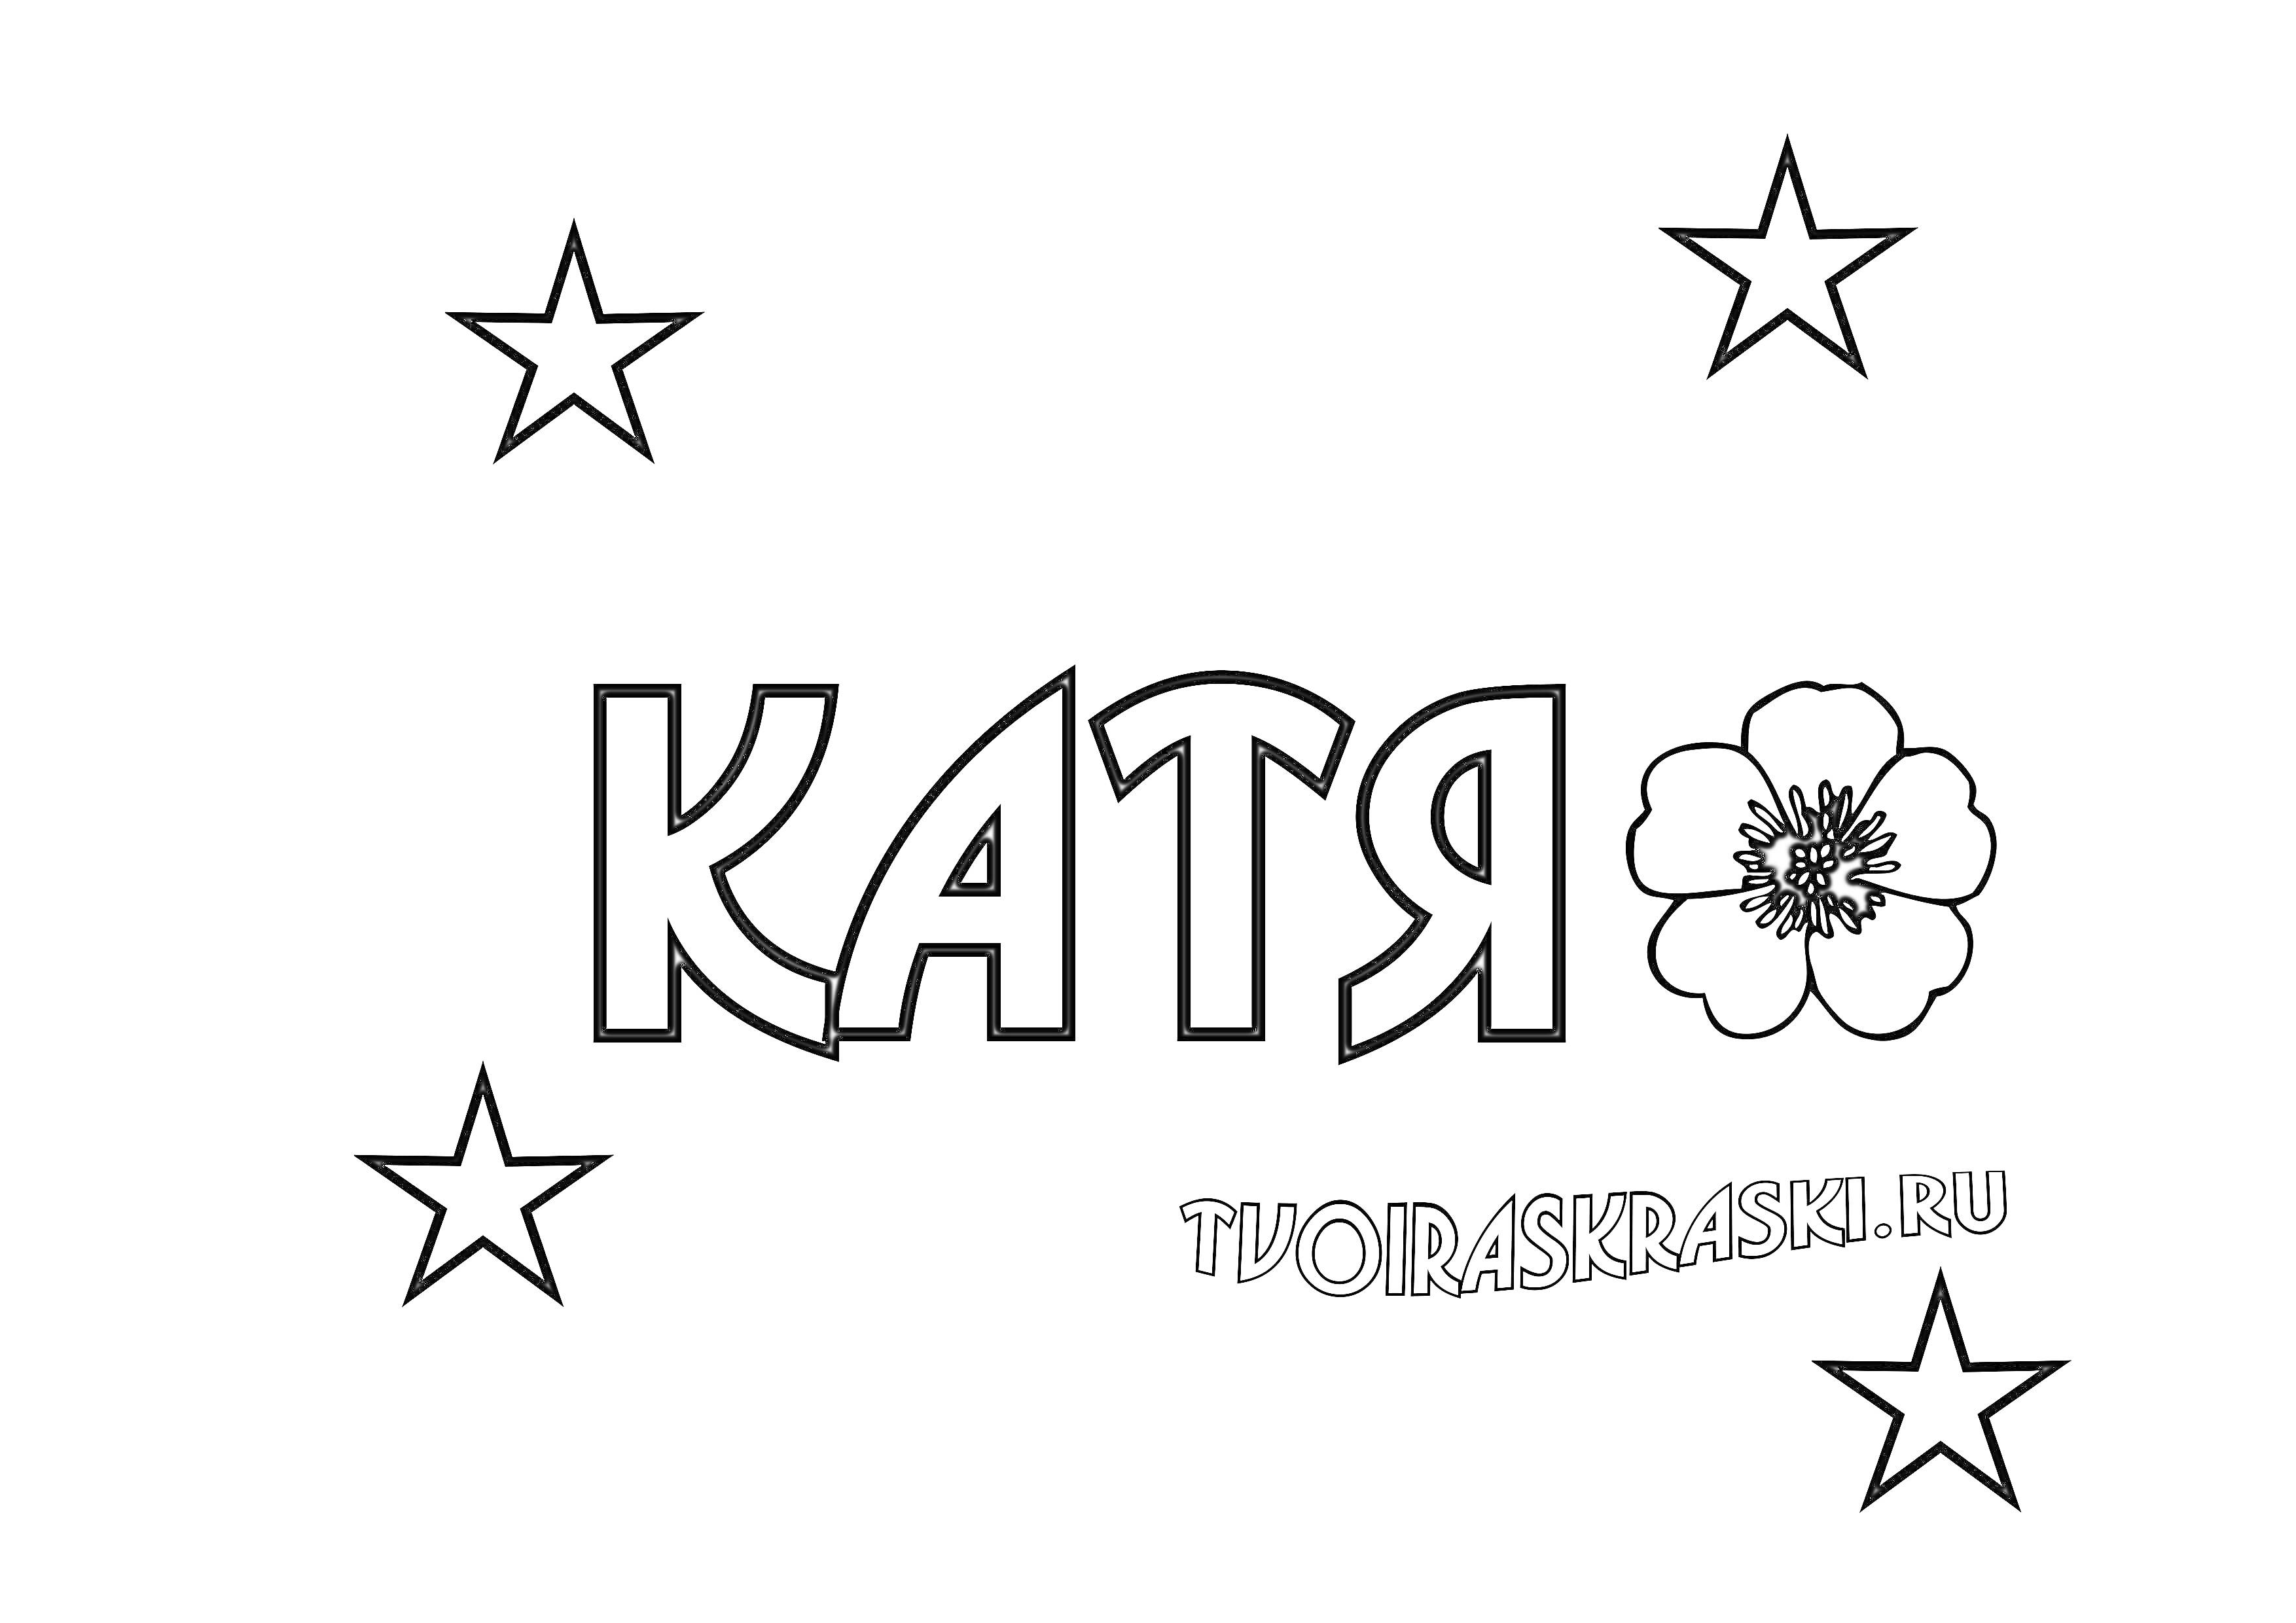 Раскраска Картинка с именем Катя, звезды и цветок